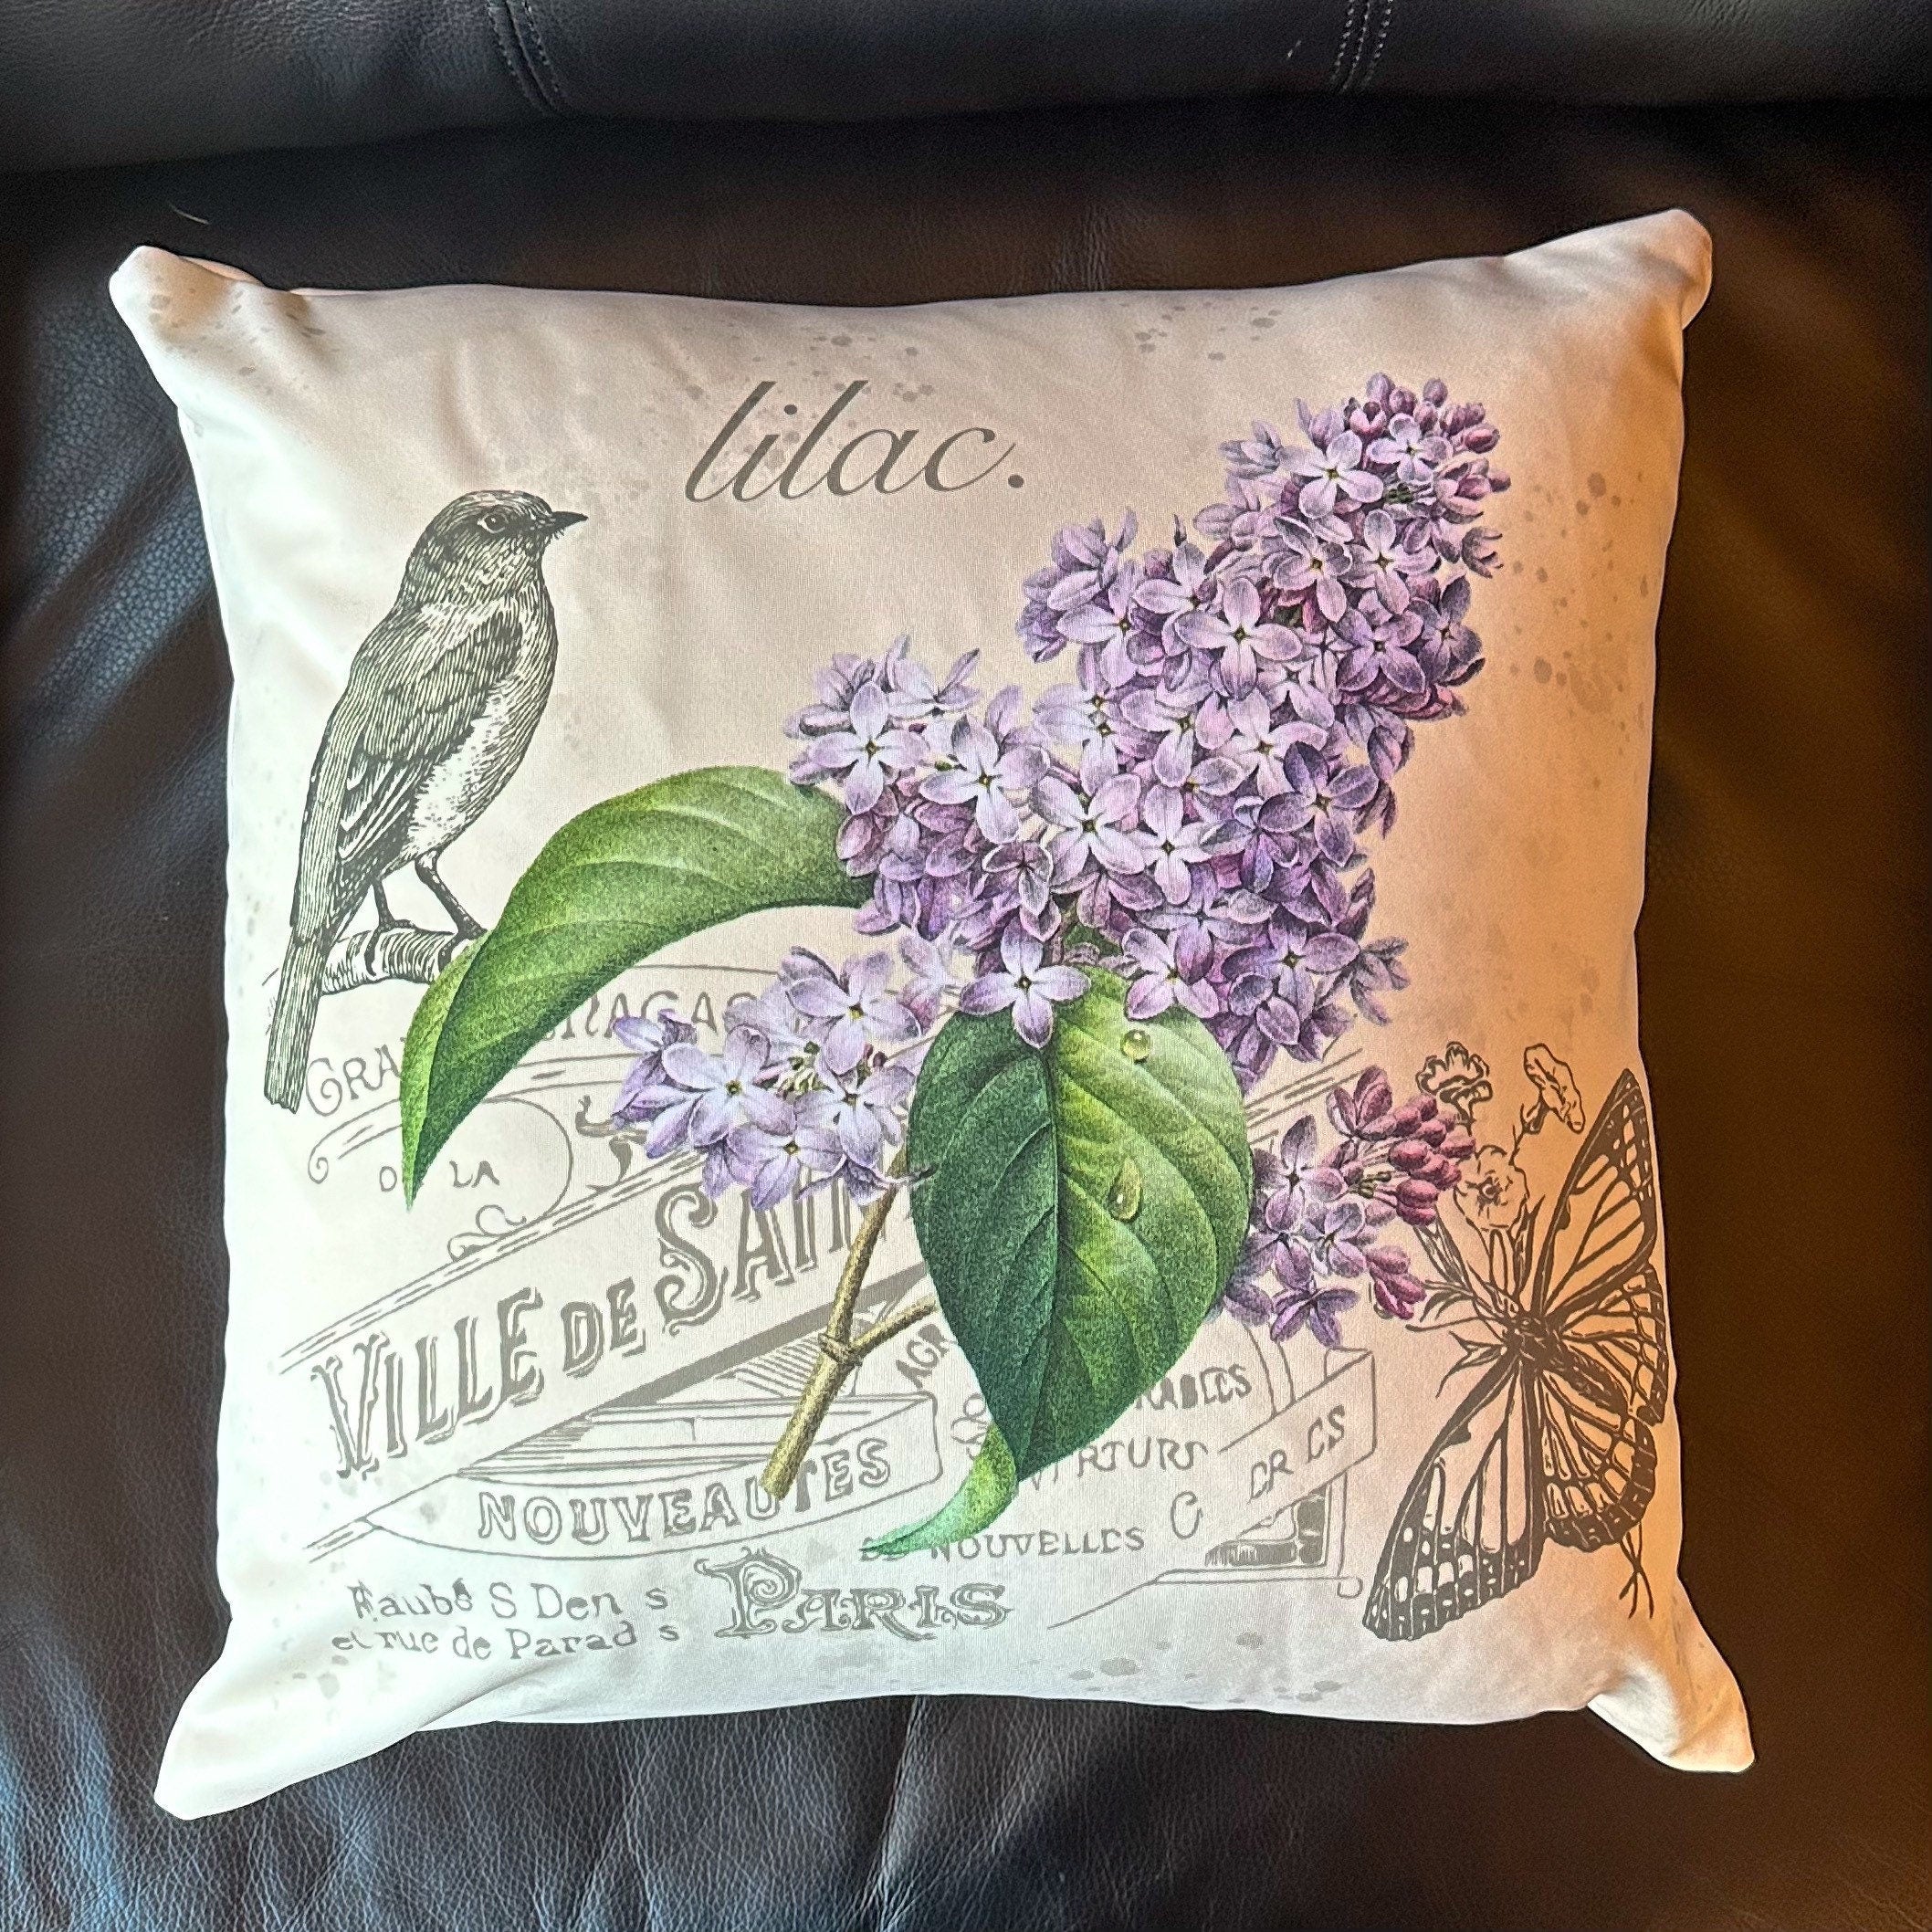 Vintage Botanical Lilac Bush Pillow with Bird and Butterfly - Garden Lover Friend Gift Idea - Gardening Theme Flower Farmer Decoration Throw